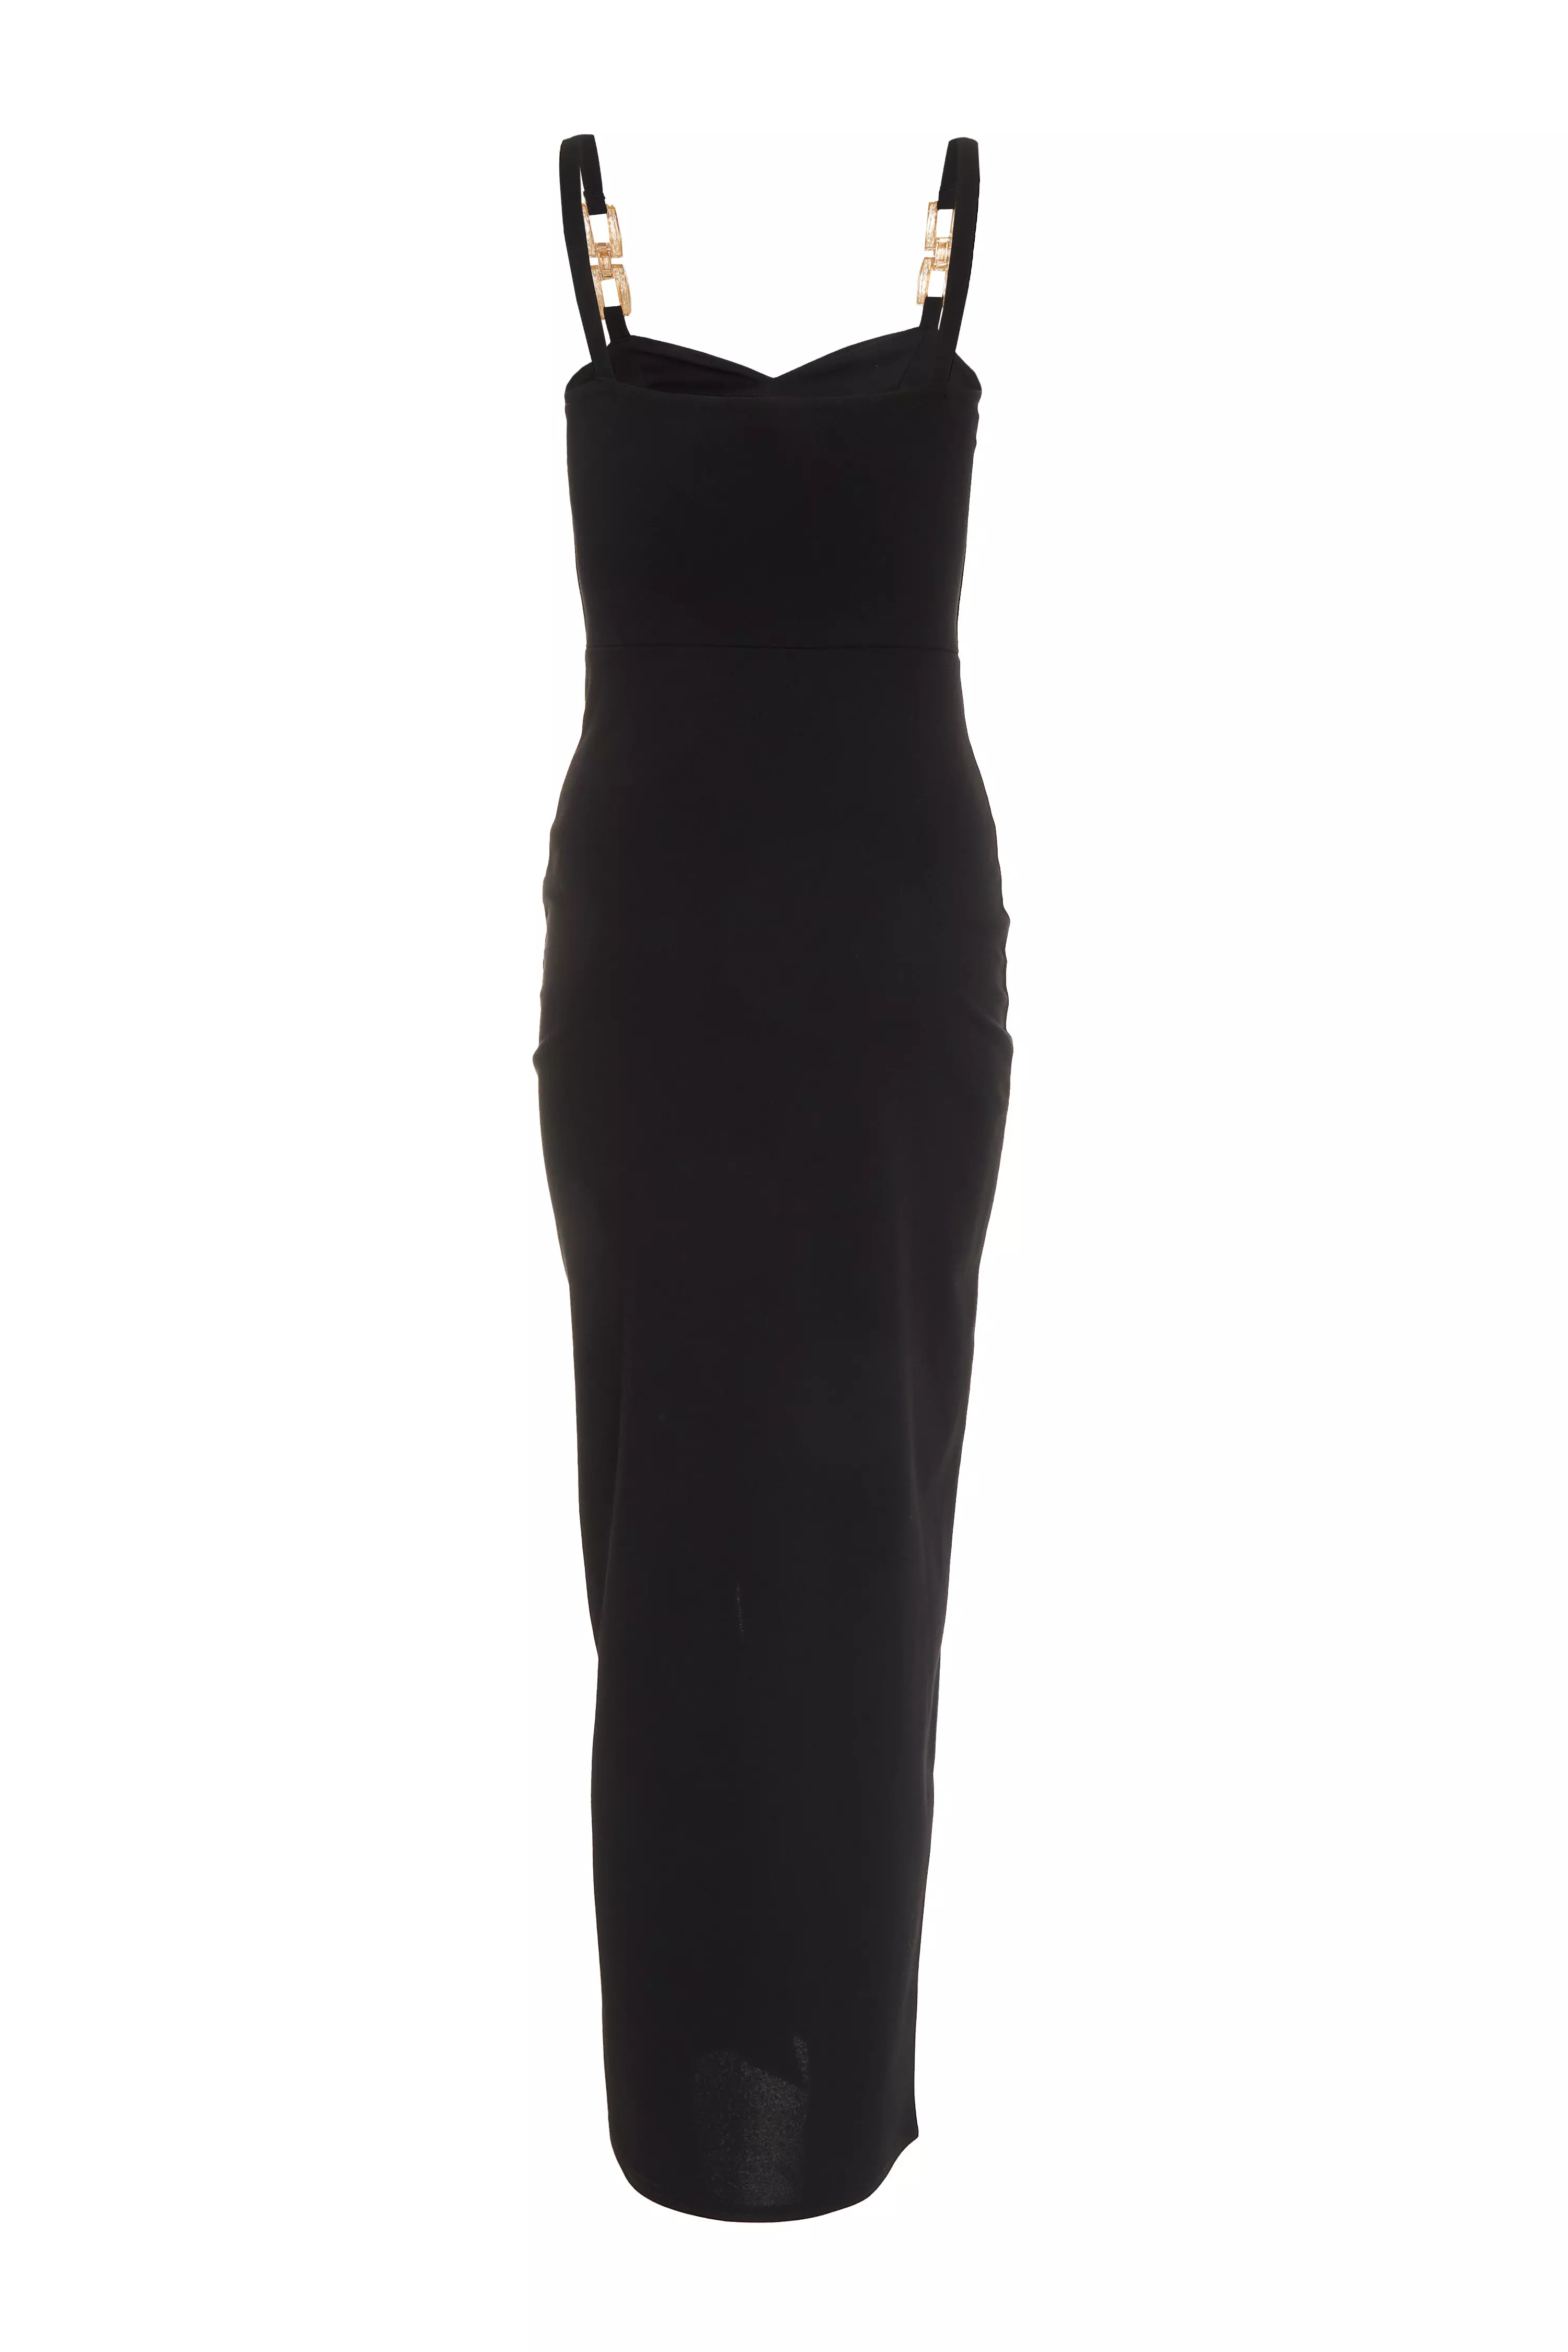 Black Buckle Strap Maxi Dress - QUIZ Clothing